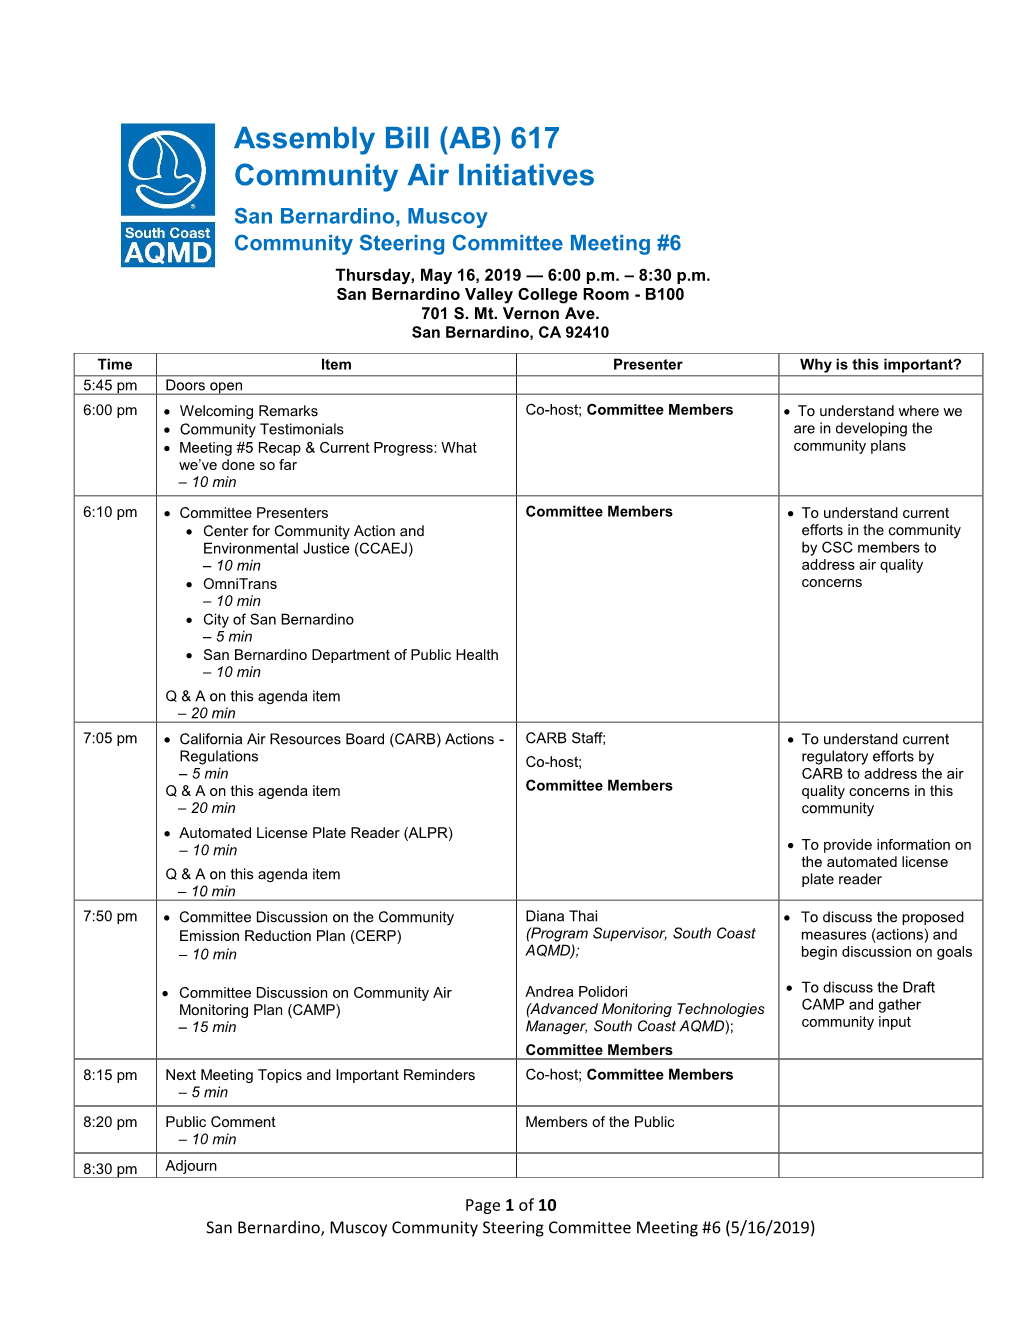 Assembly Bill (AB) 617 Community Air Initiatives San Bernardino, Muscoy Community Steering Committee Meeting #6 Thursday, May 16, 2019 — 6:00 P.M